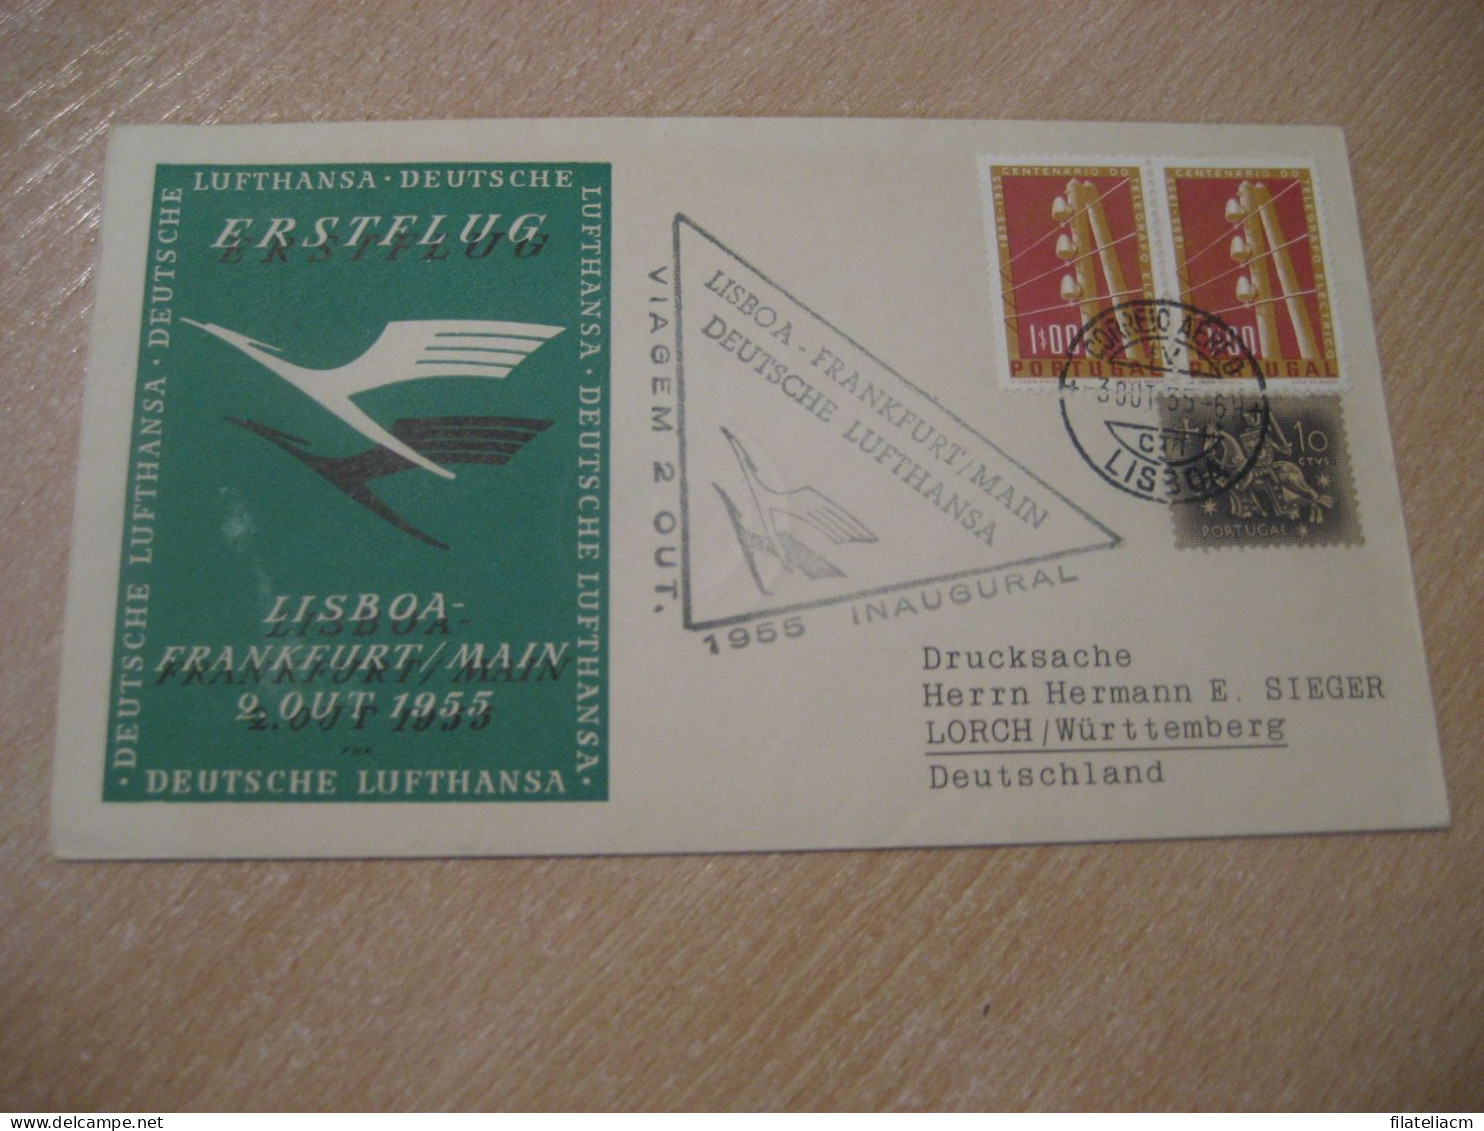 LISBOA - FRANKFURT 1955 To Lorch First Flight Inaugural Lufthansa Cancel Cover PORTUGAL GERMANY - Briefe U. Dokumente